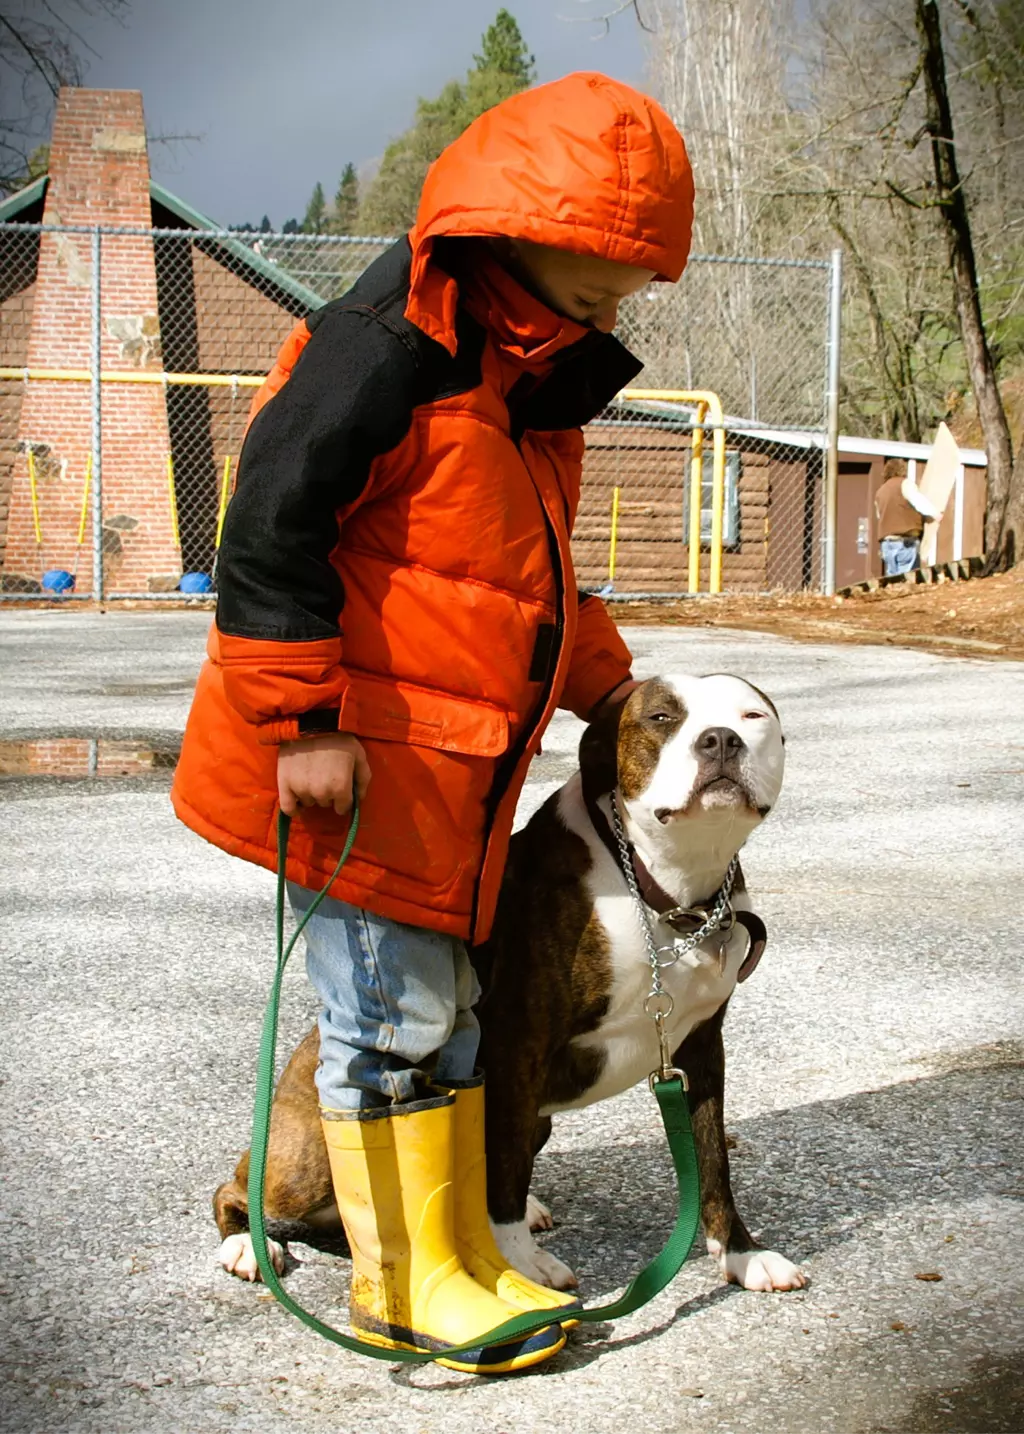 Child in orange coat with brown dog.